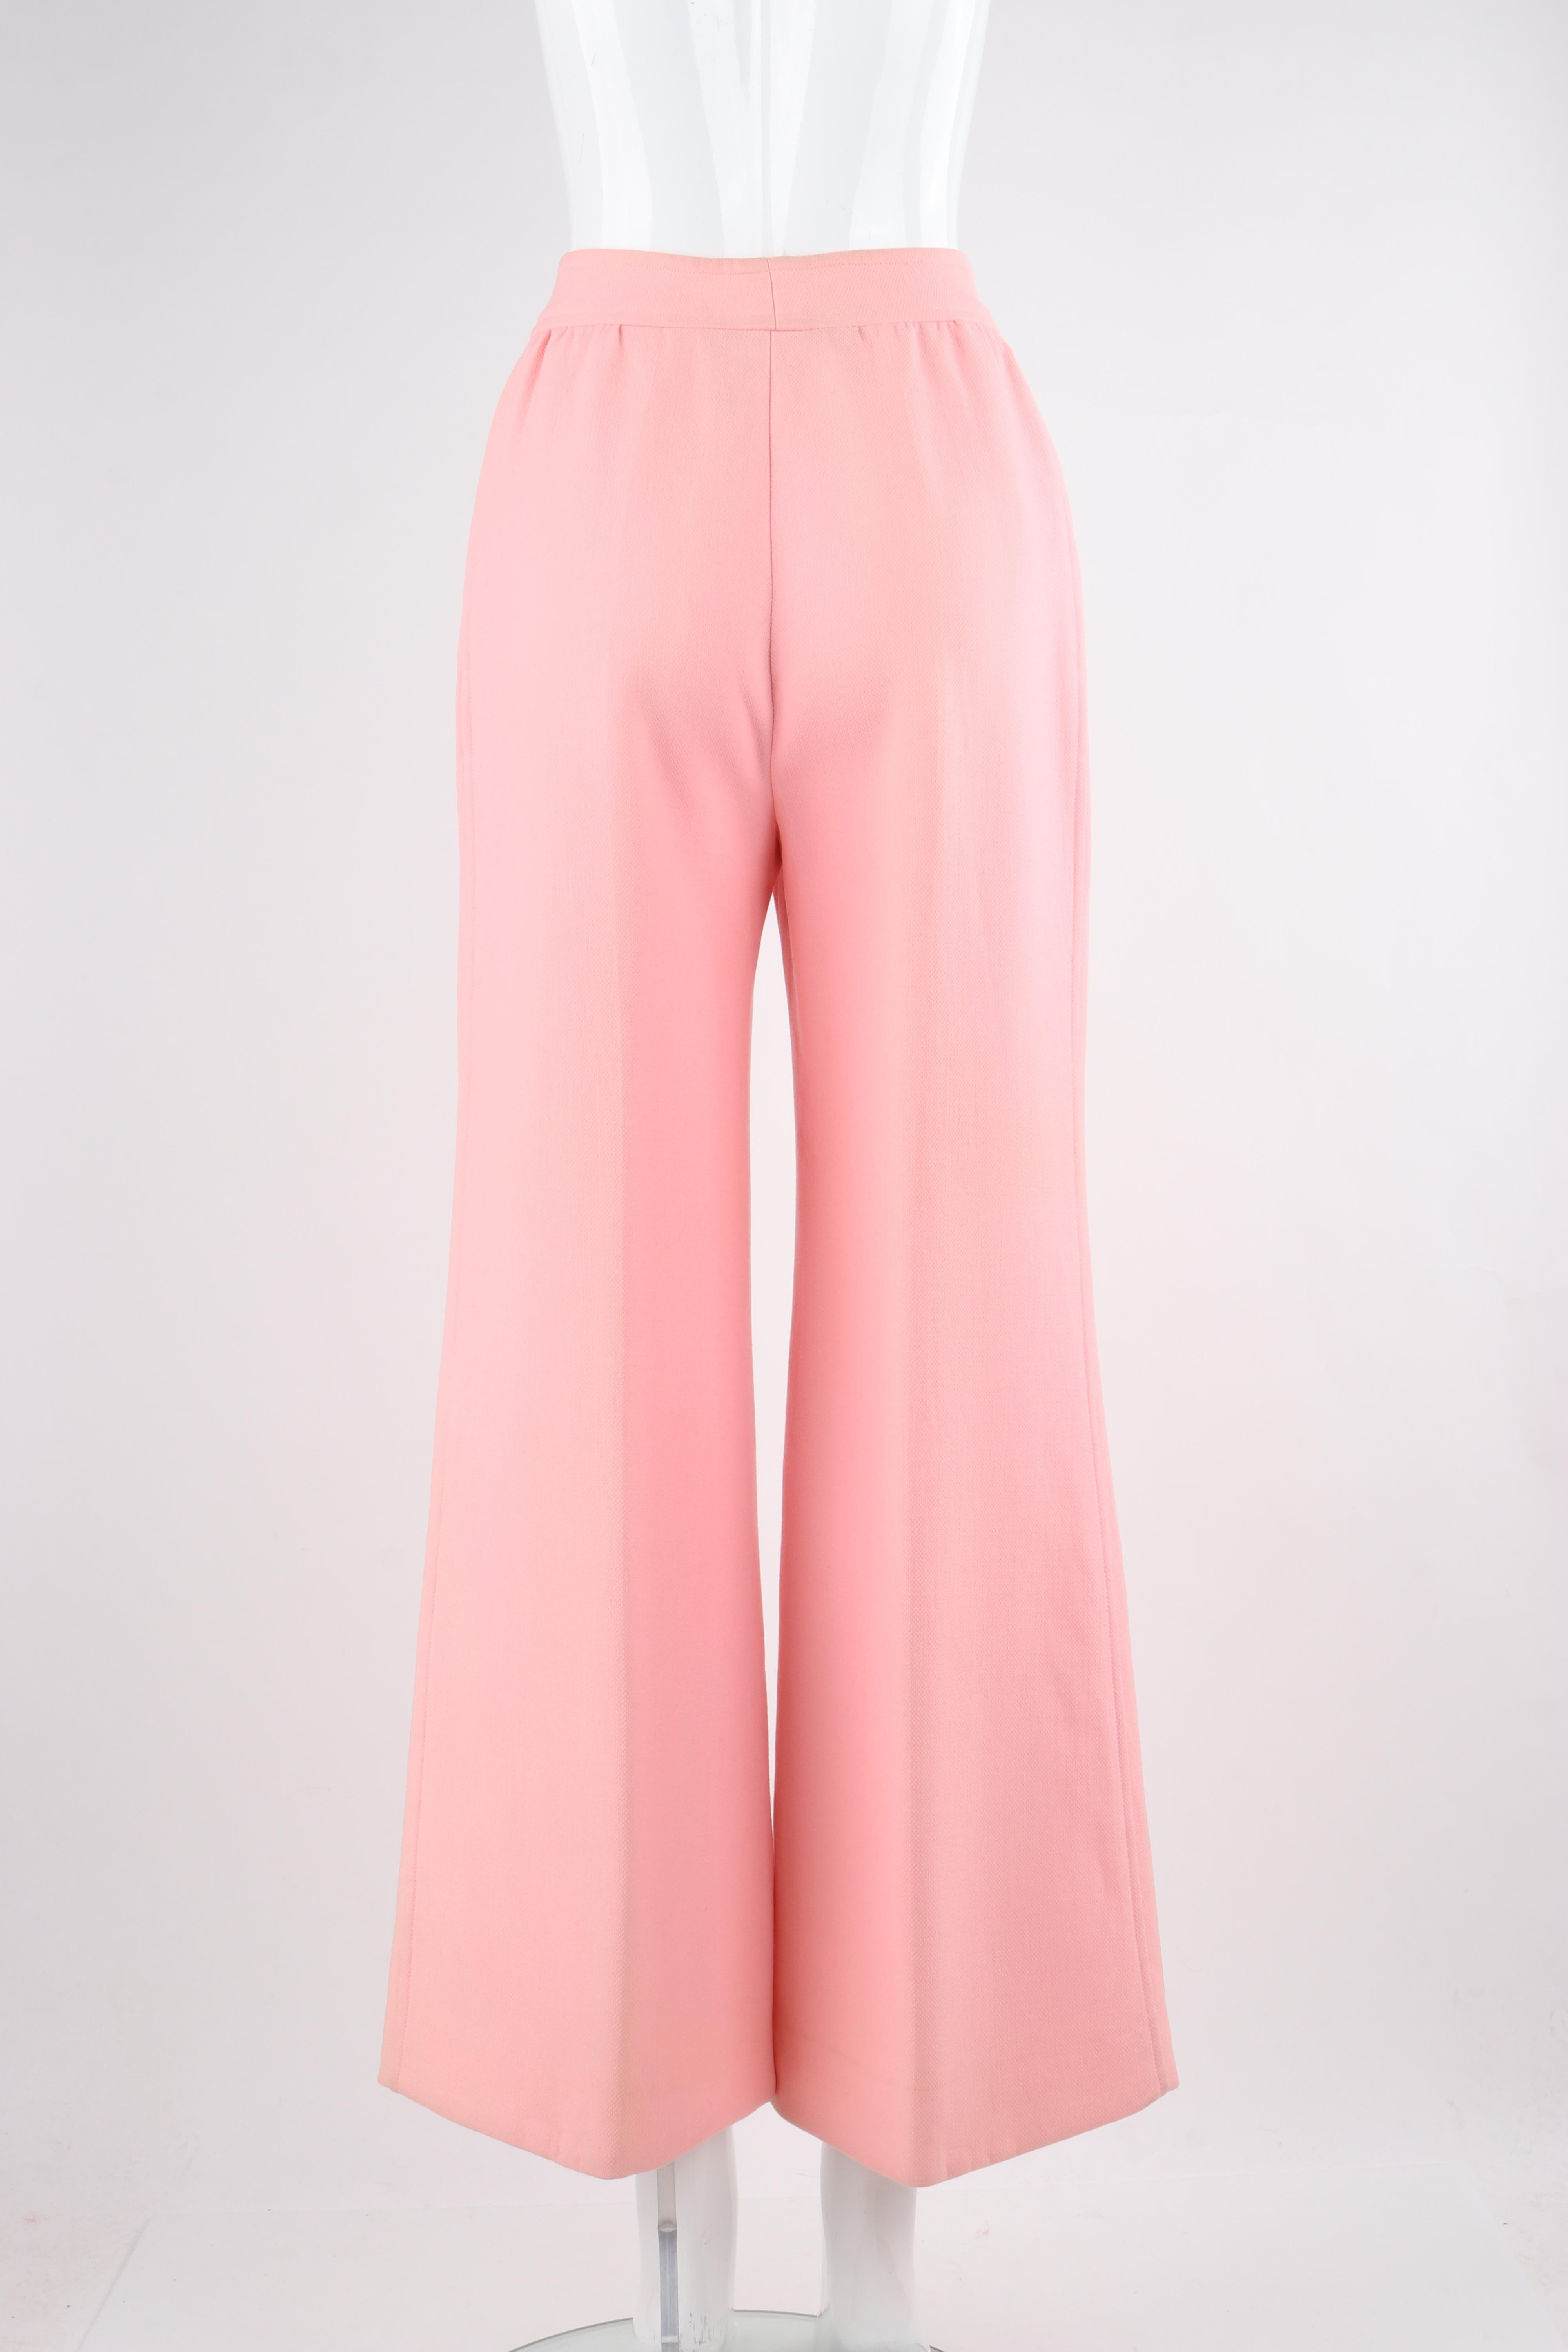 COURREGES Hyperbole c.1970's Vtg Pink Wool High Rise Wide Leg Trouser Pants For Sale 1